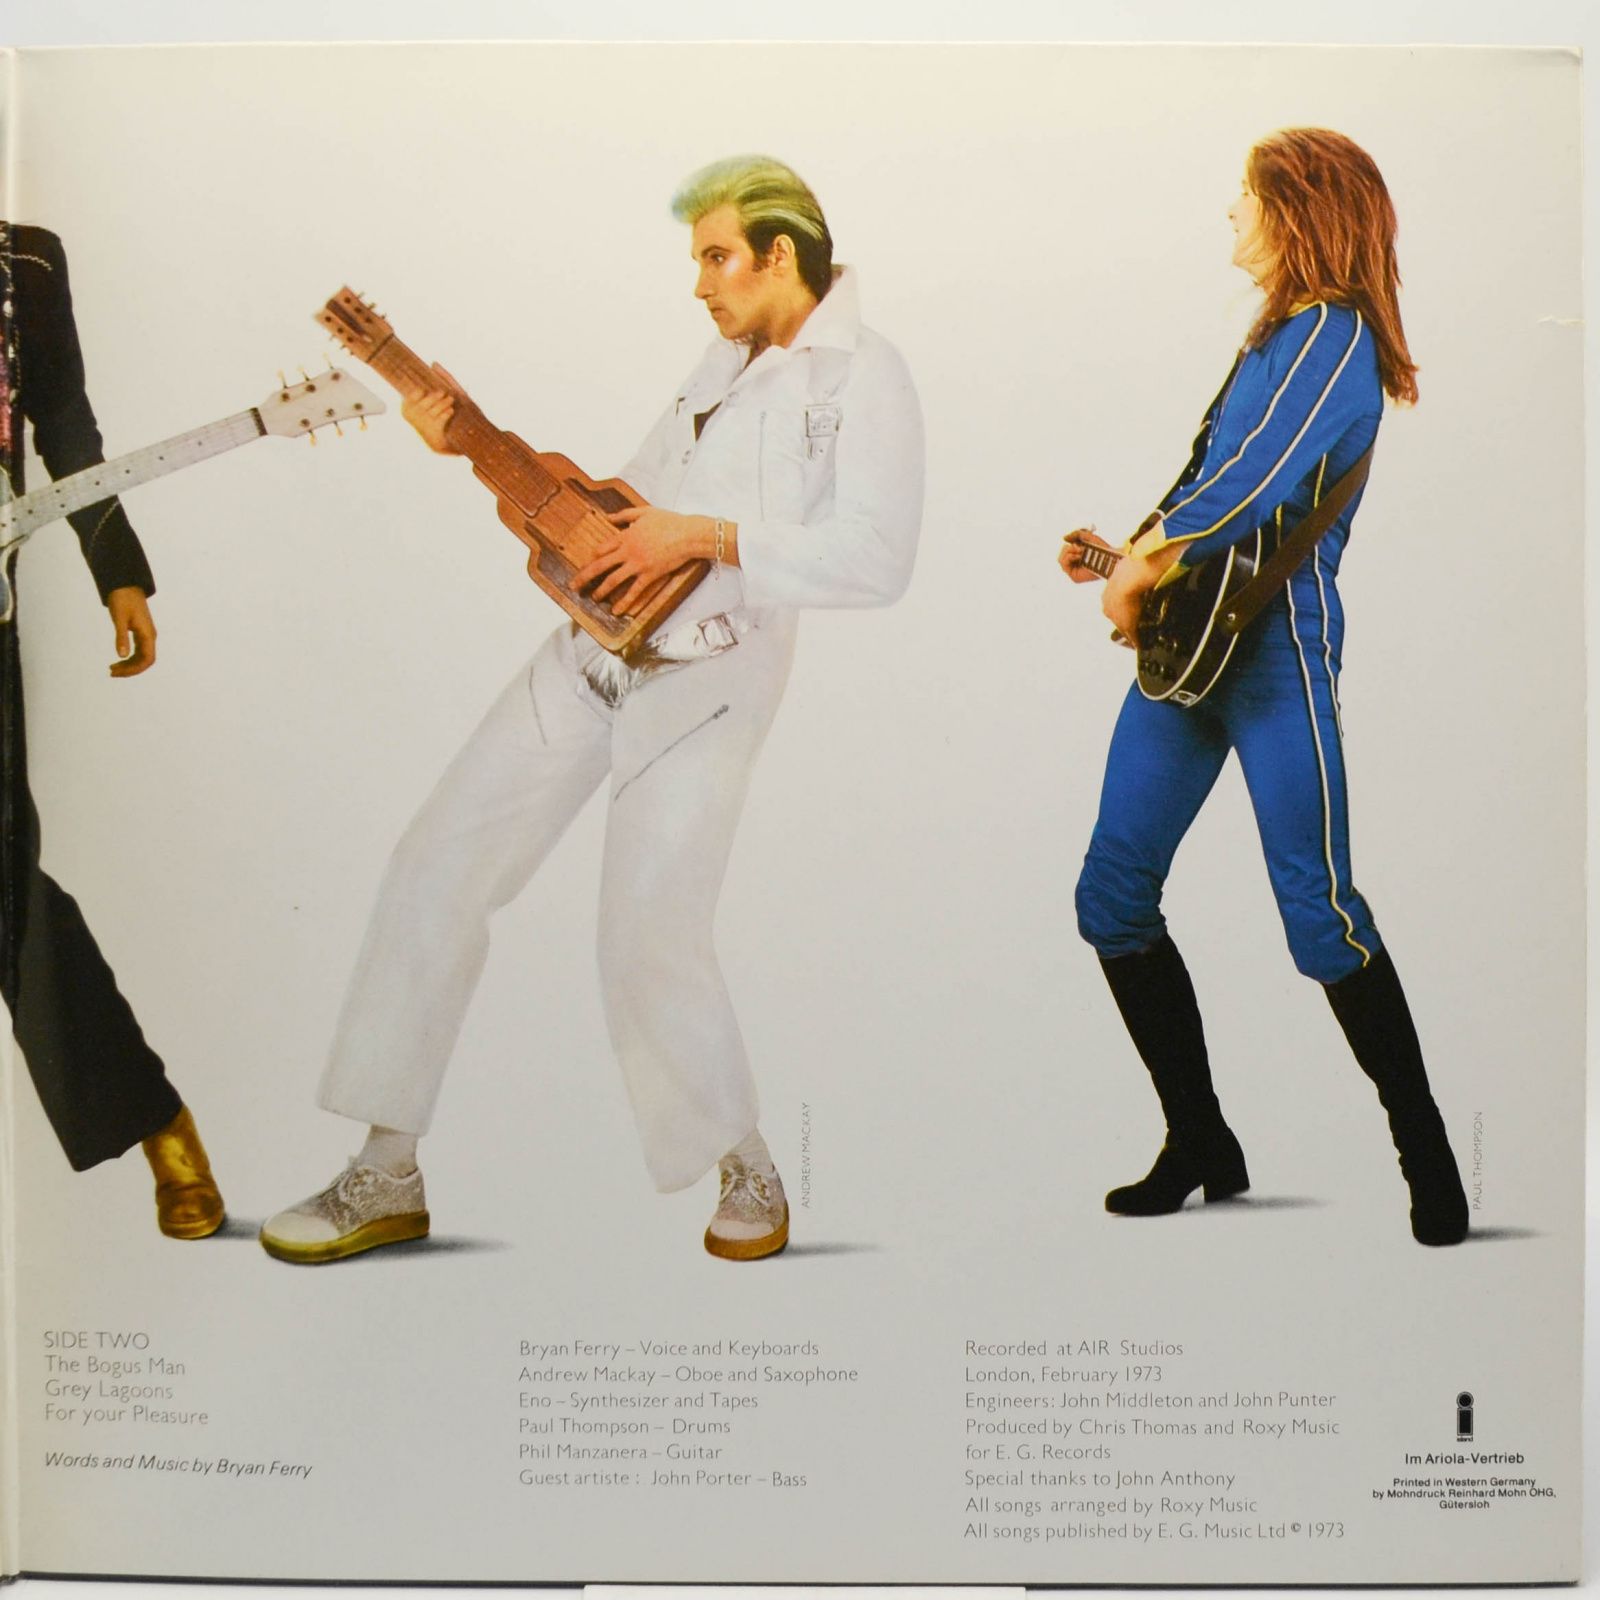 Roxy Music — For Your Pleasure, 1973